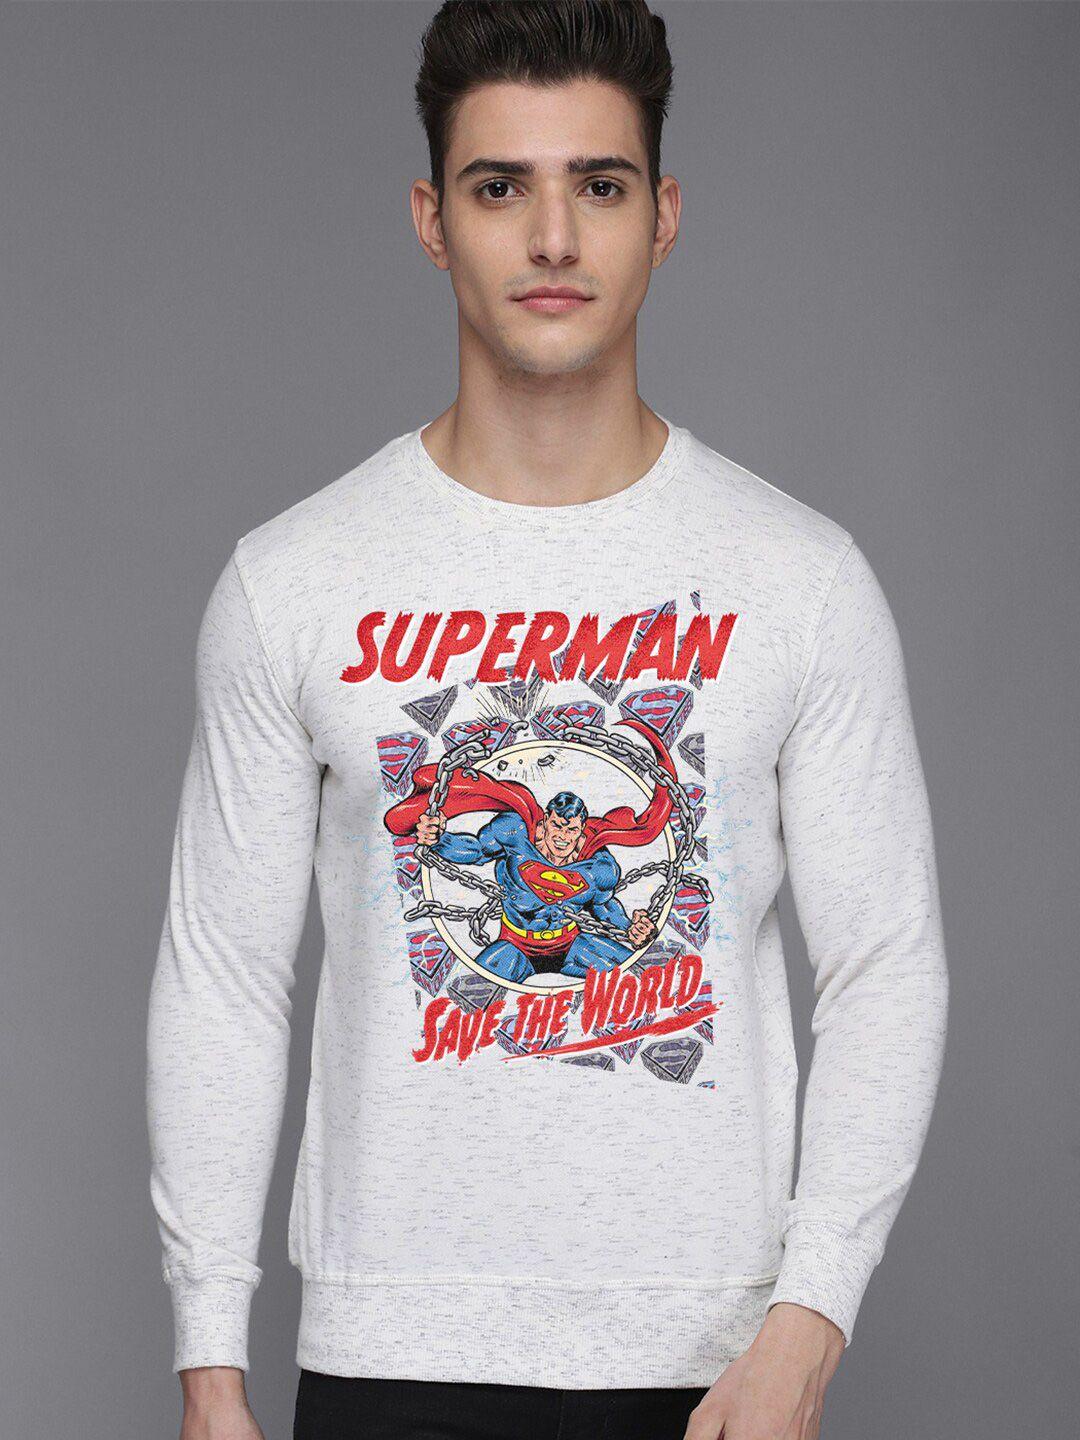 free-authority-men-printed-superman-sweatshirts